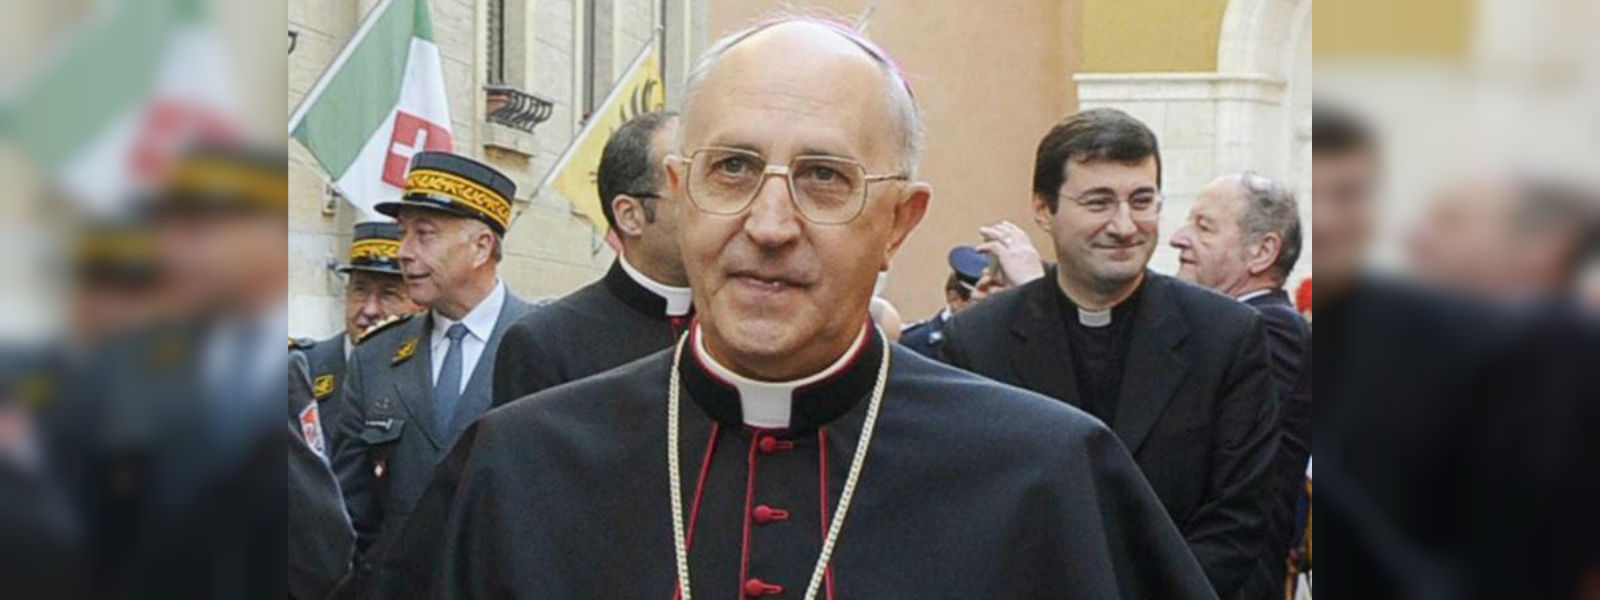 His Eminence Cardinal Fernando Filoni visits SL